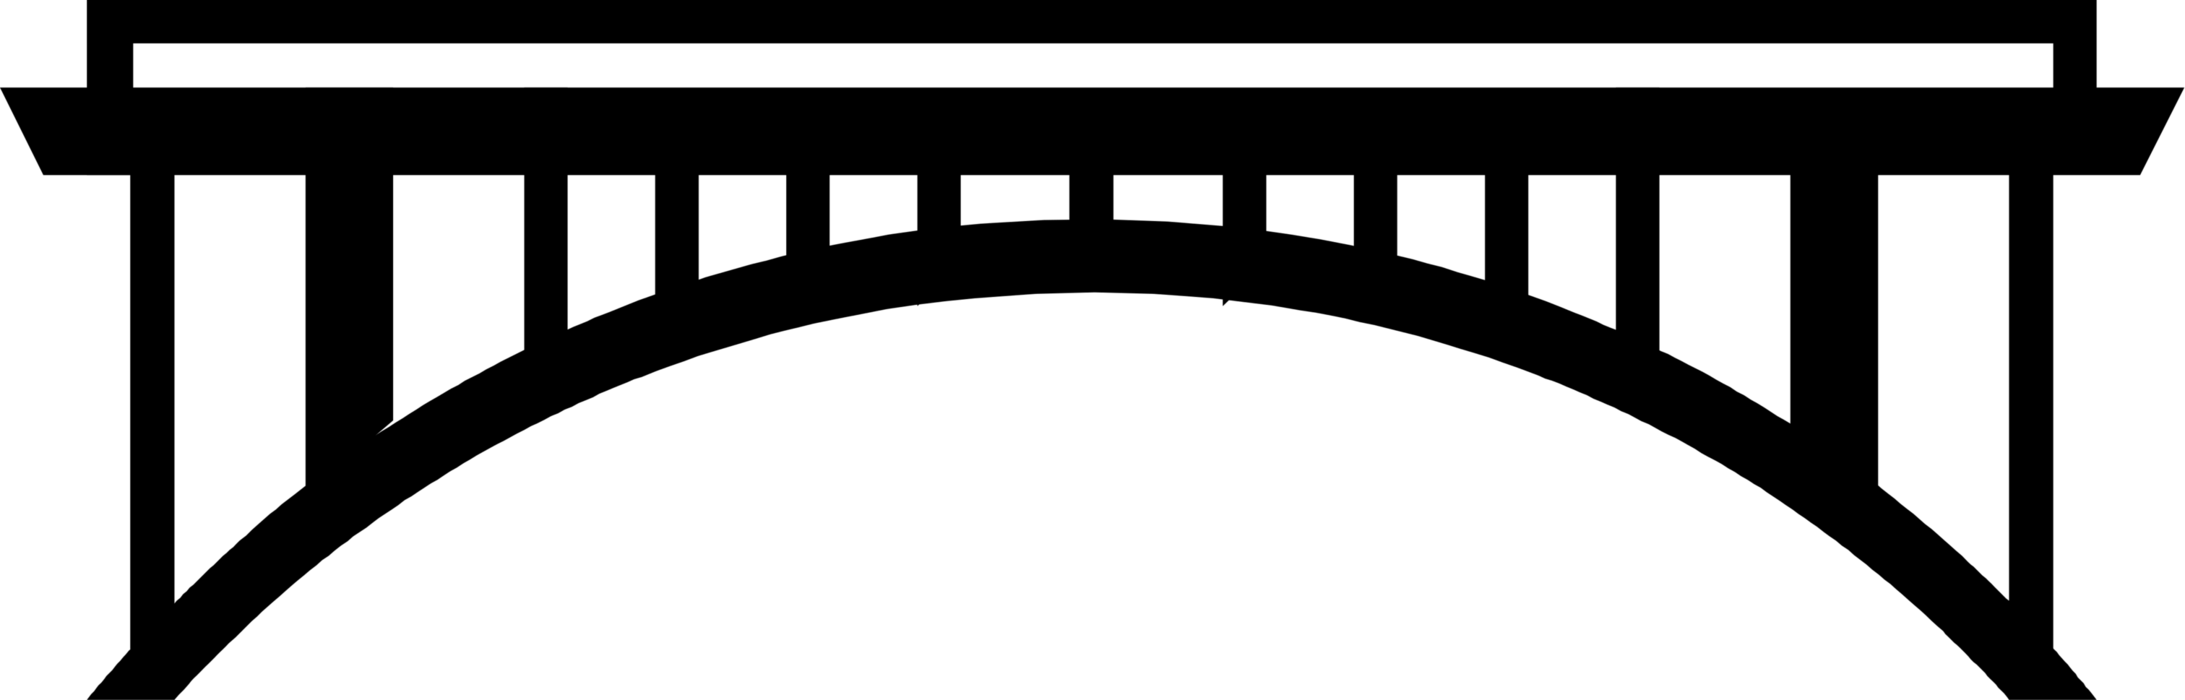 Vector Illustration of Suspension Bridge Symbol